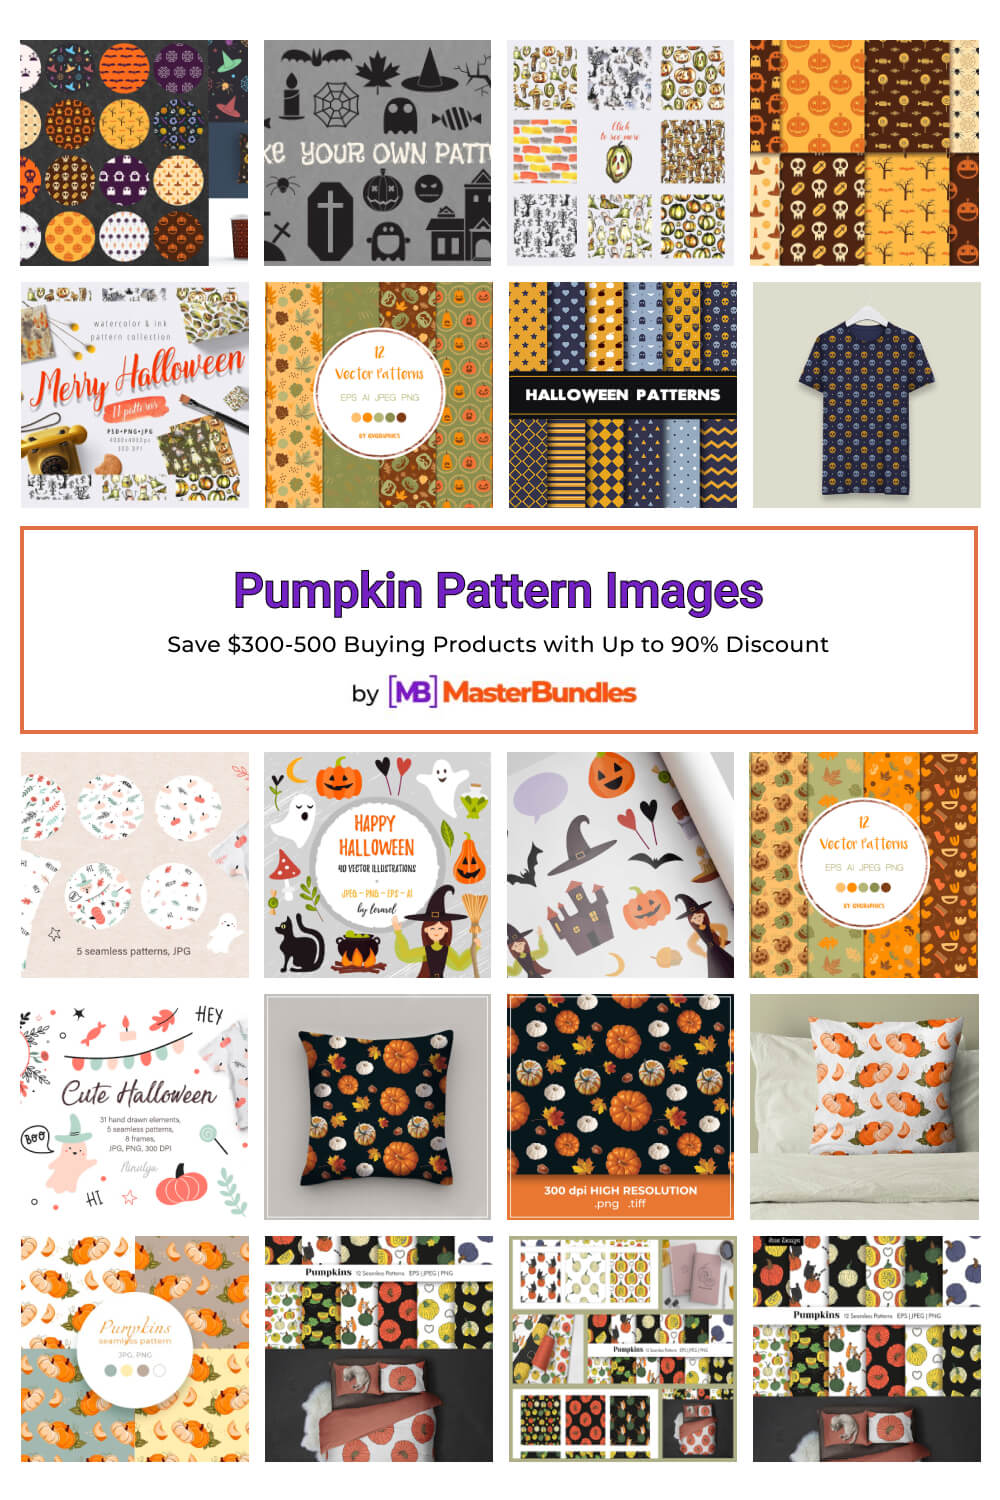 pumpkin pattern images pinterest image.